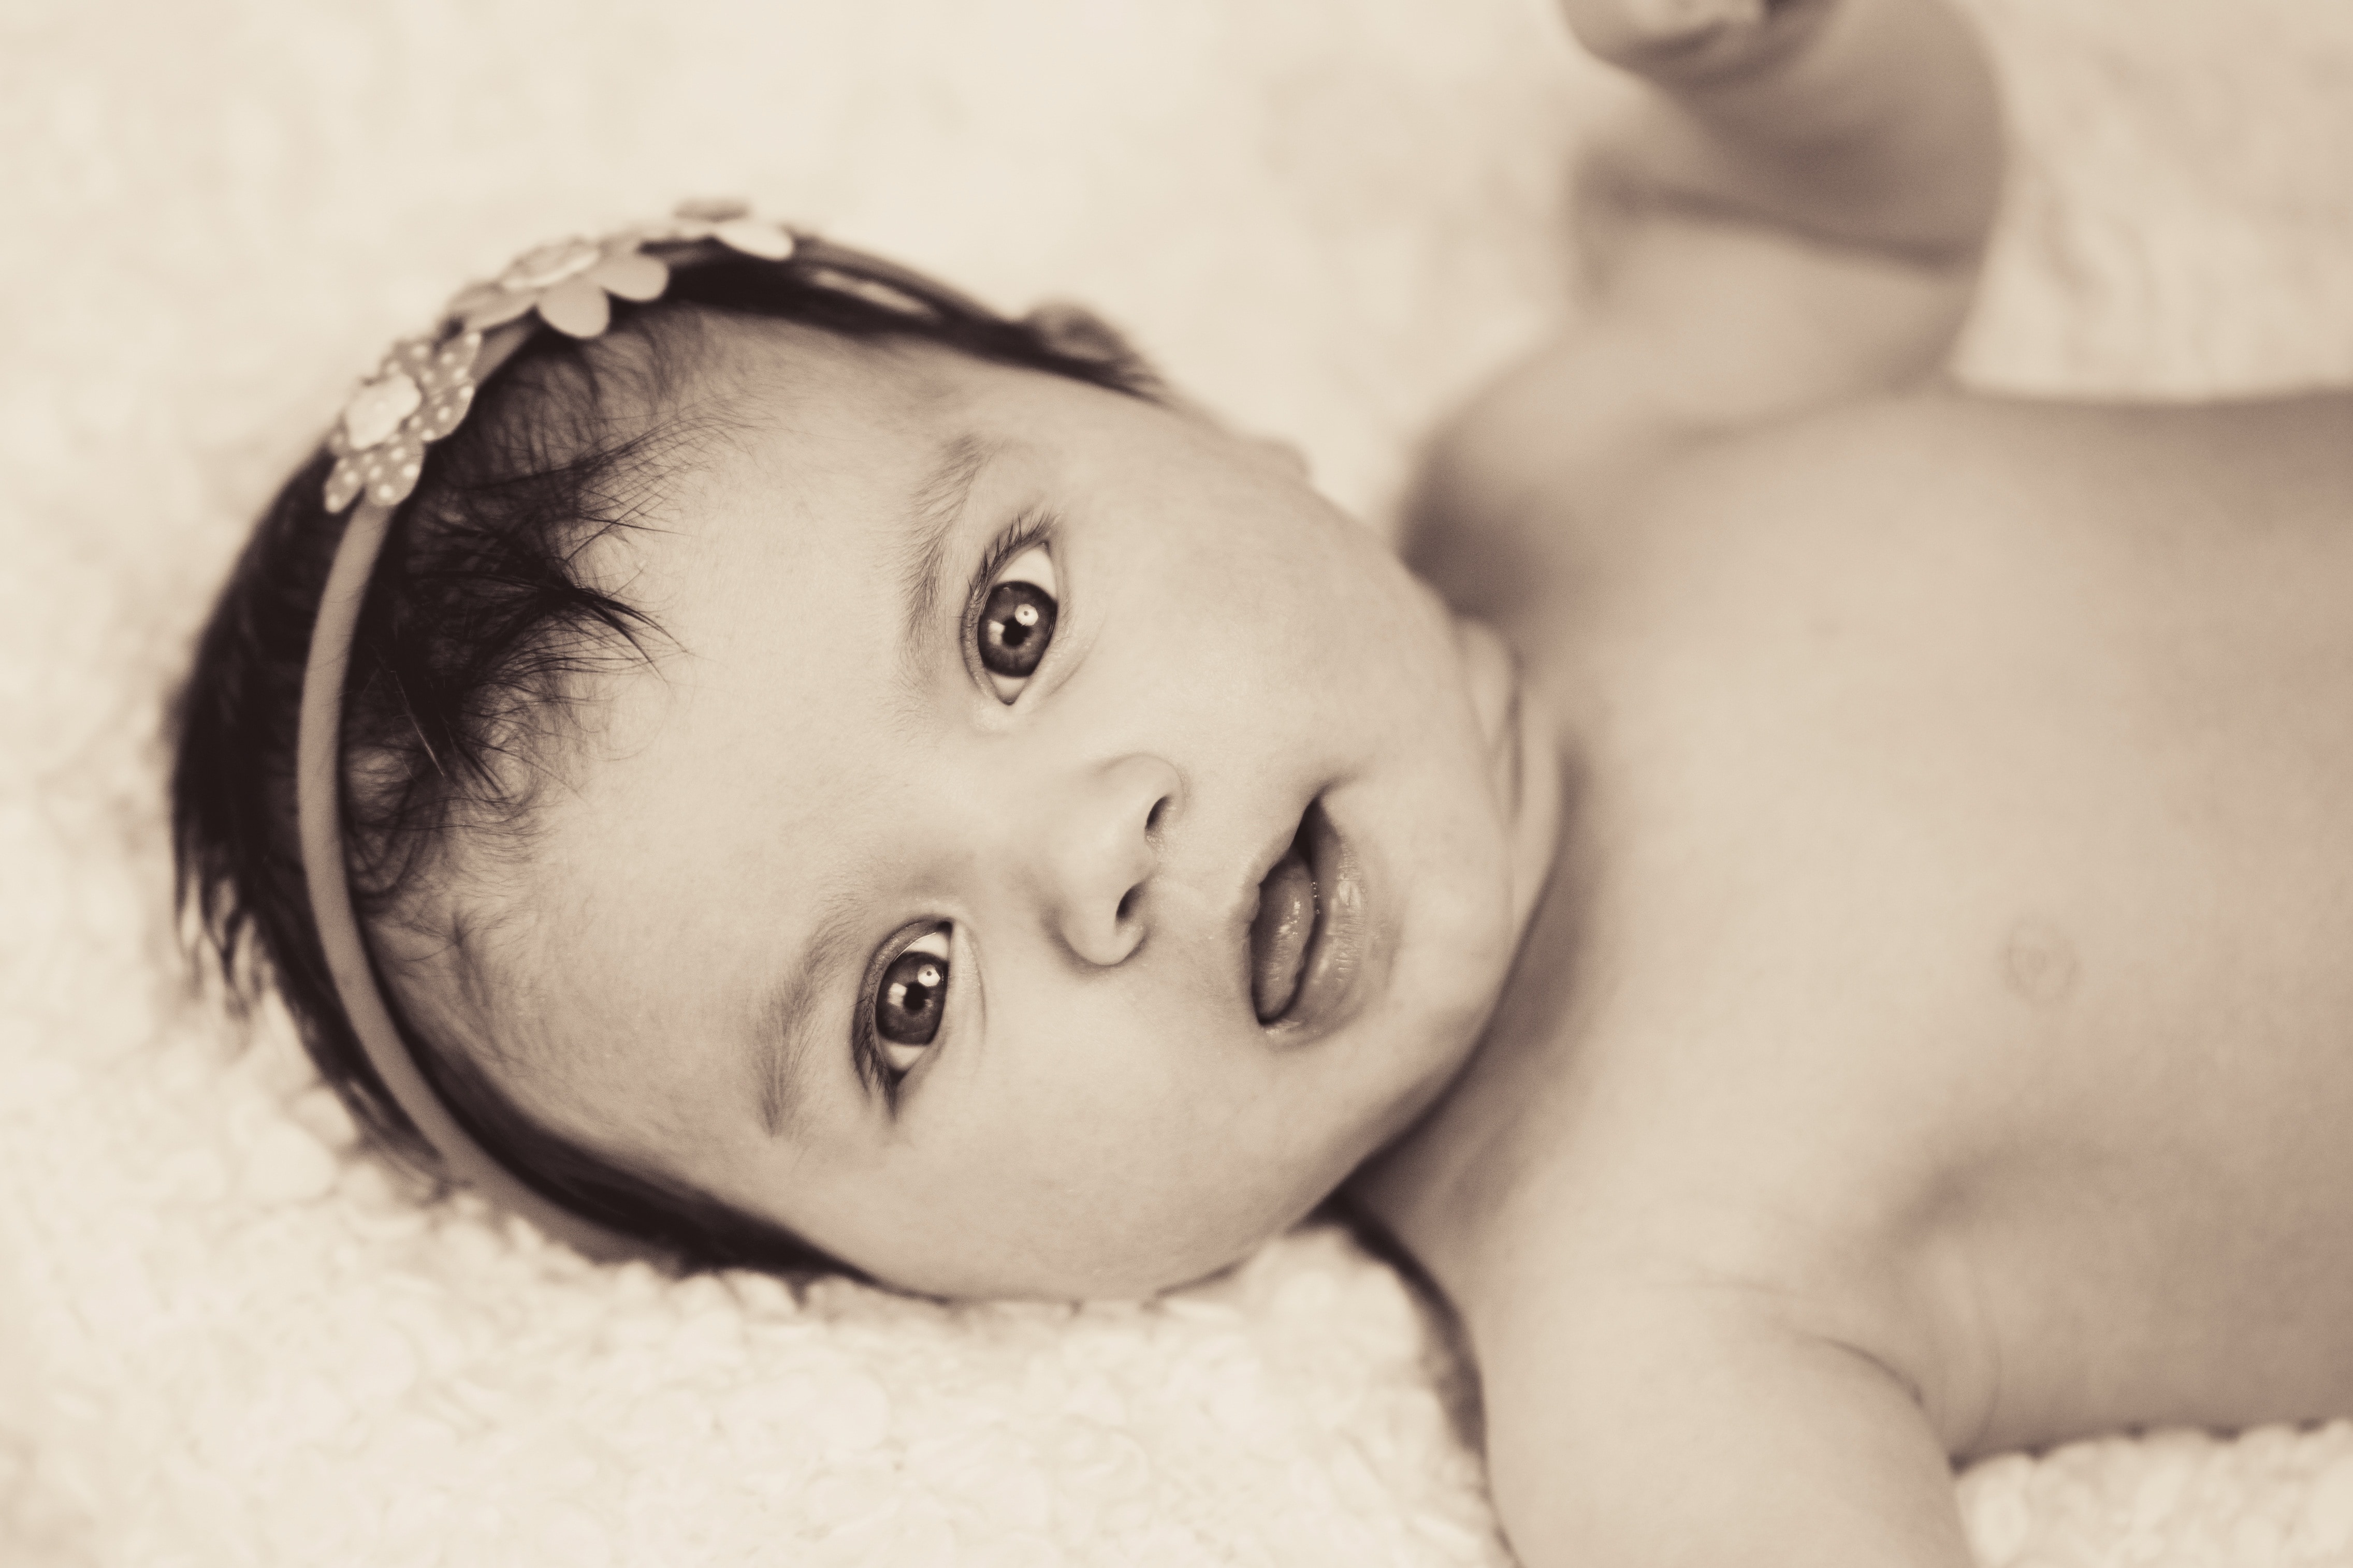 naked infant lying on white textile